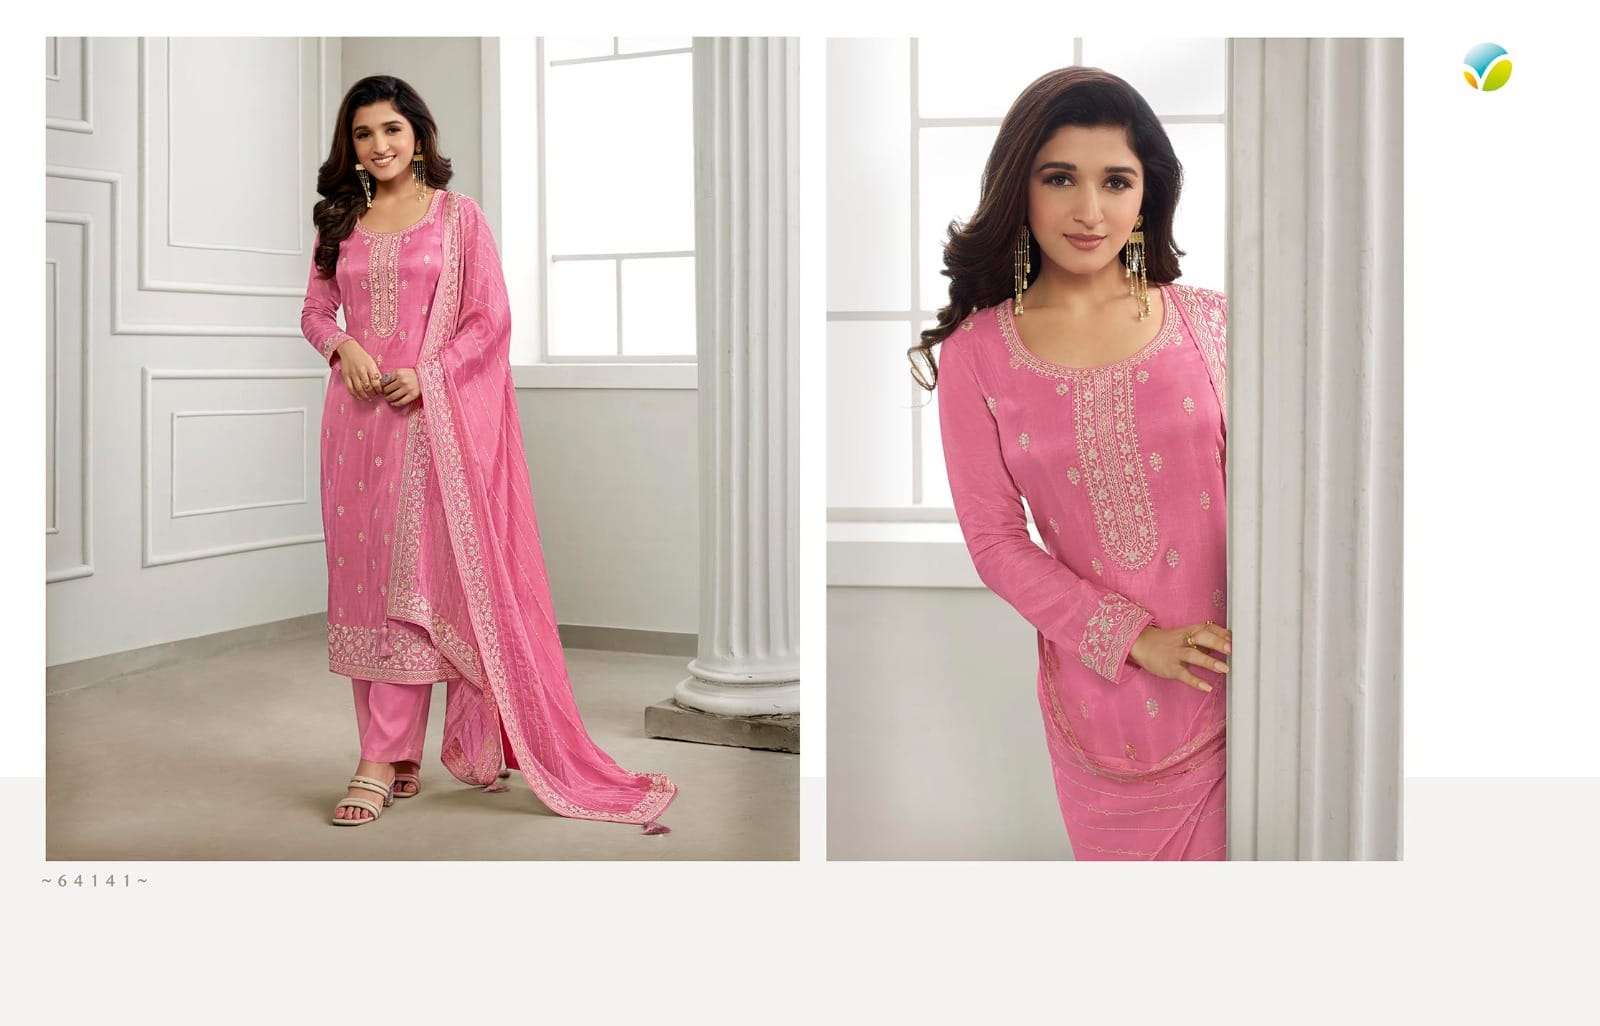 vinay fashion saanvi vol-2 64141-64147 series function special designer salwar suits catalogue wholesaler surat 